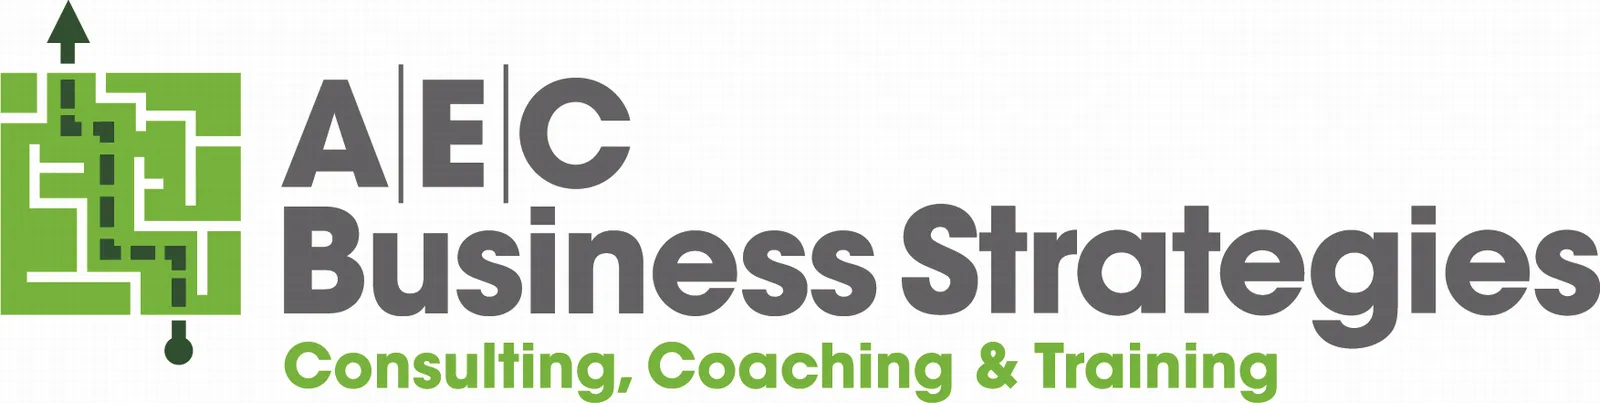 AEC Business Strategies Logo